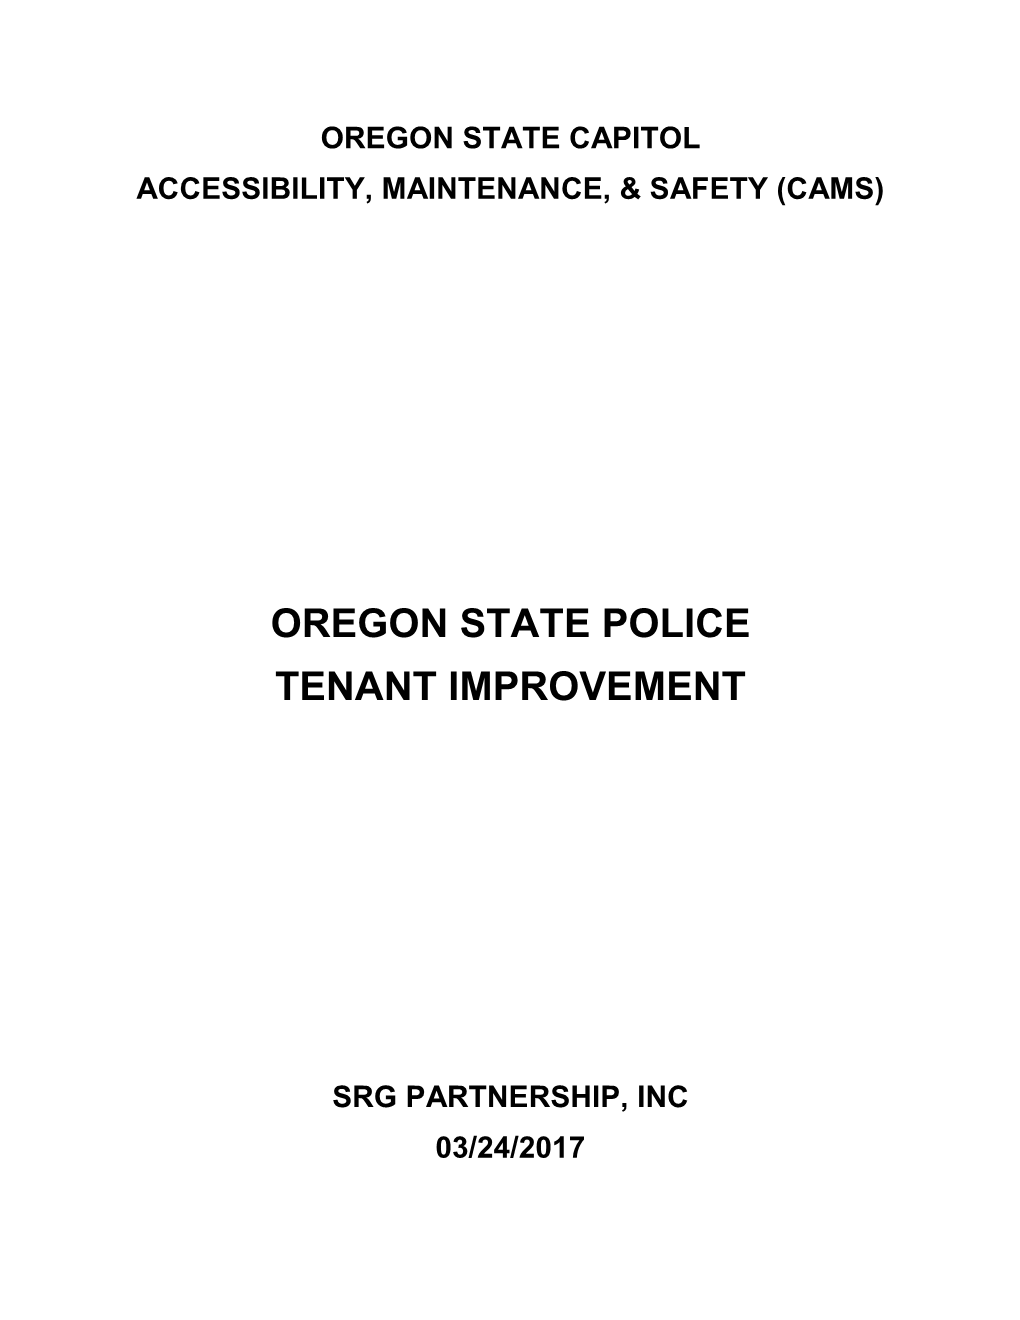 Oregon State Police Tenant Improvement